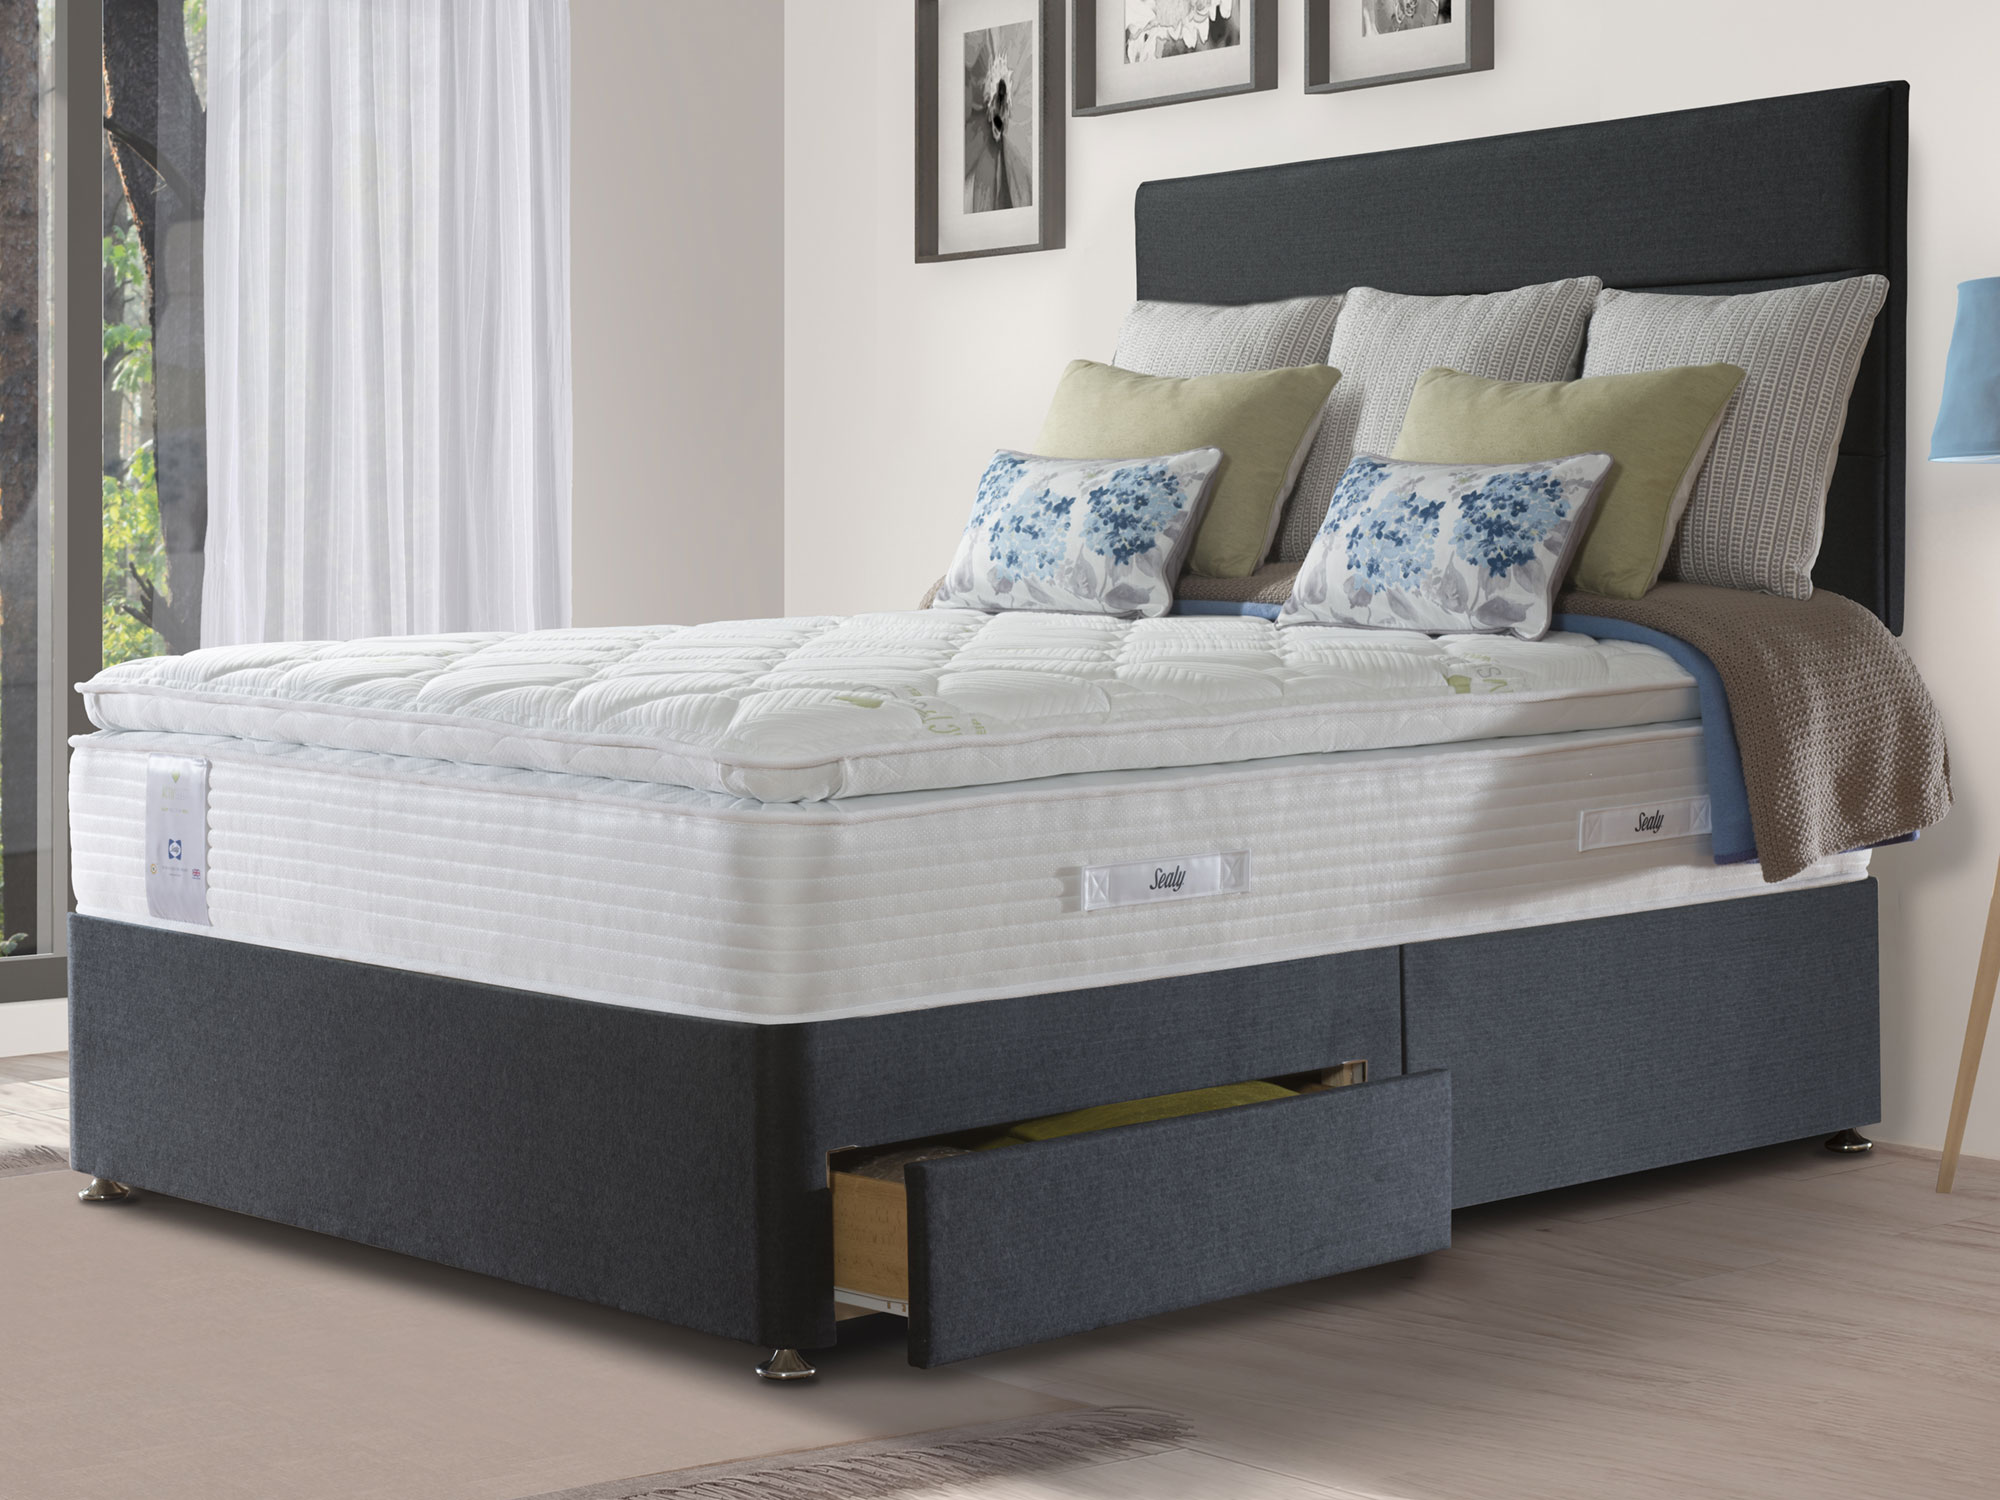 sealy euro top mattress price